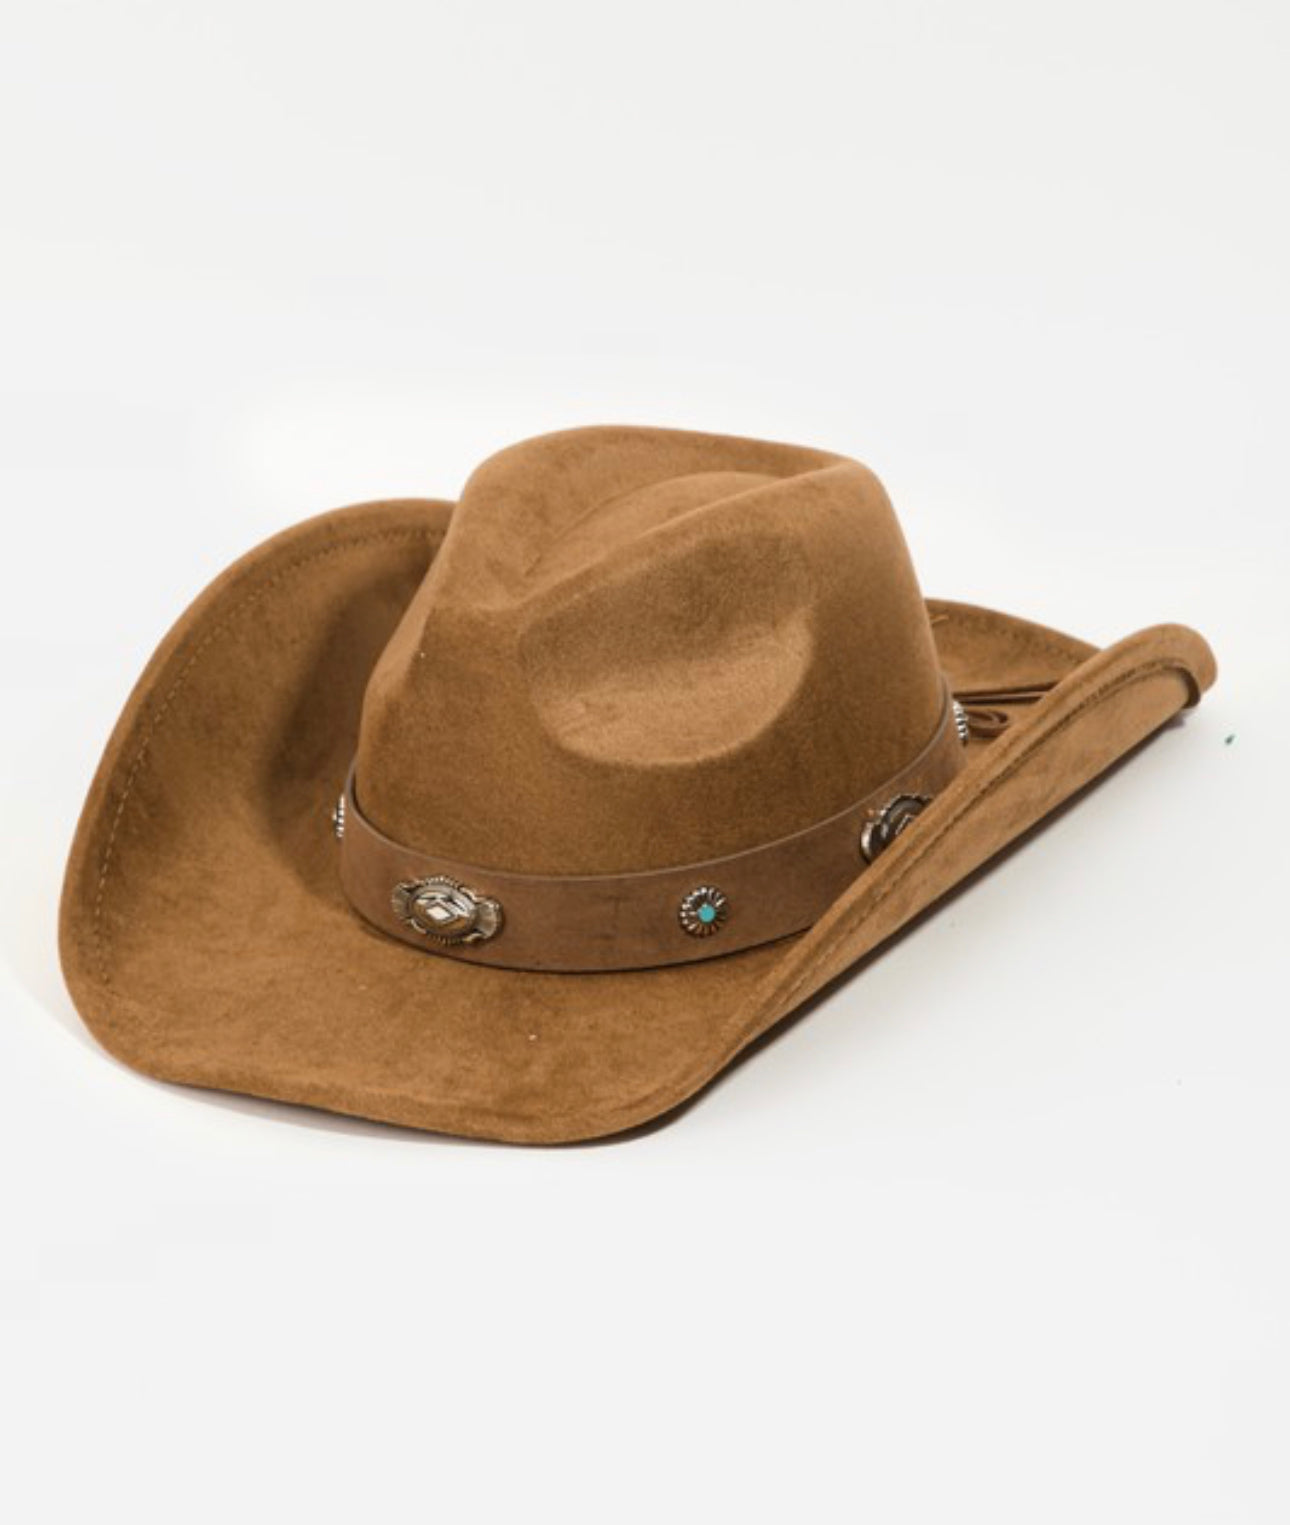 Brown sombrero